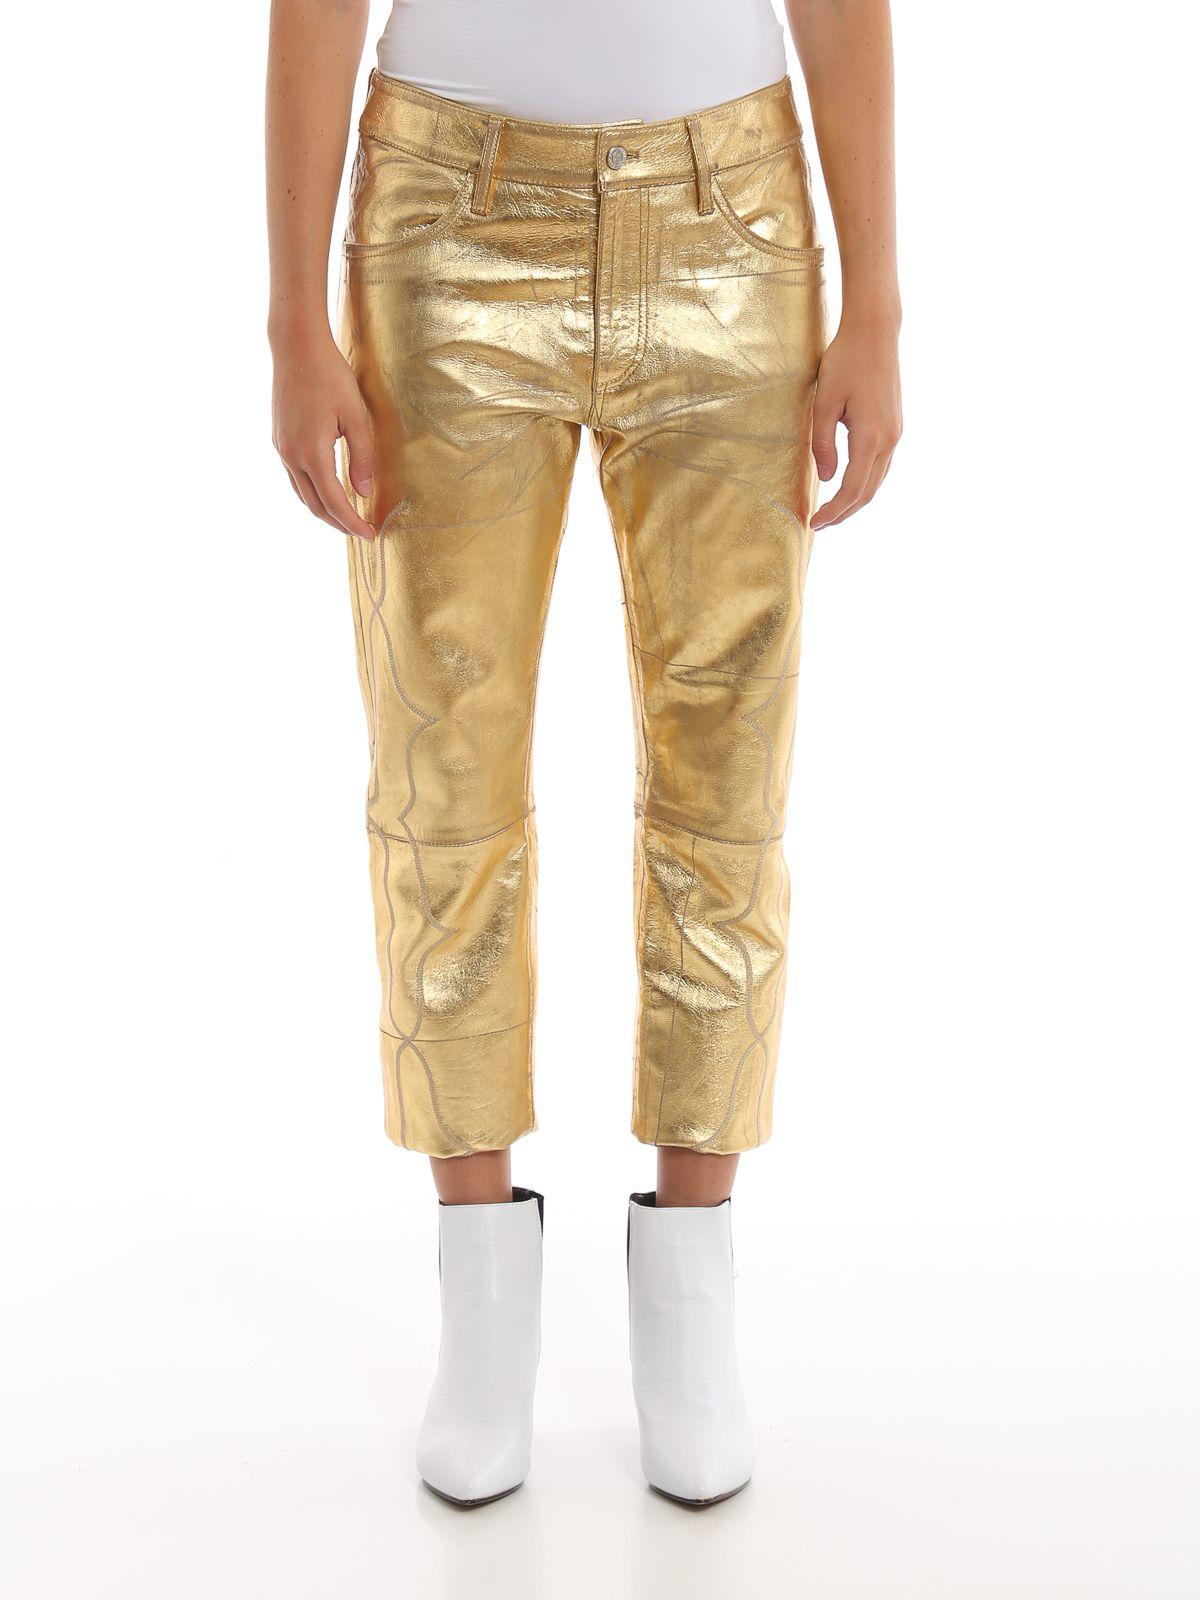 Golden Goose Deluxe Brand Leather Pants in Gold (Metallic) - Lyst